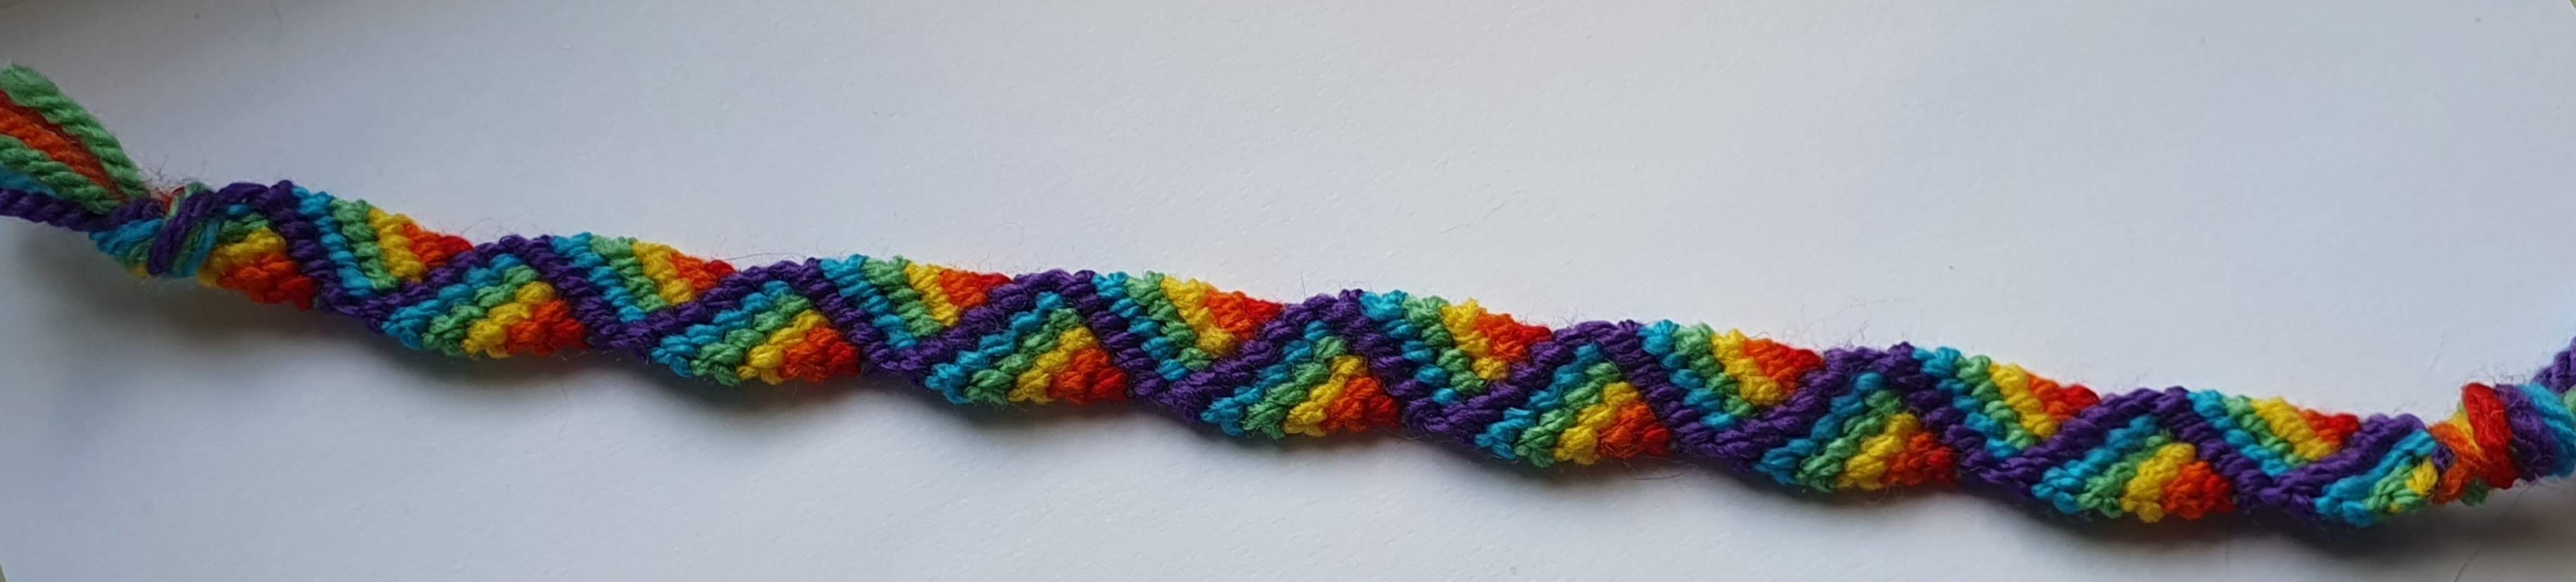 Bracelet with rainbow zigzags looking like a folded ribbon